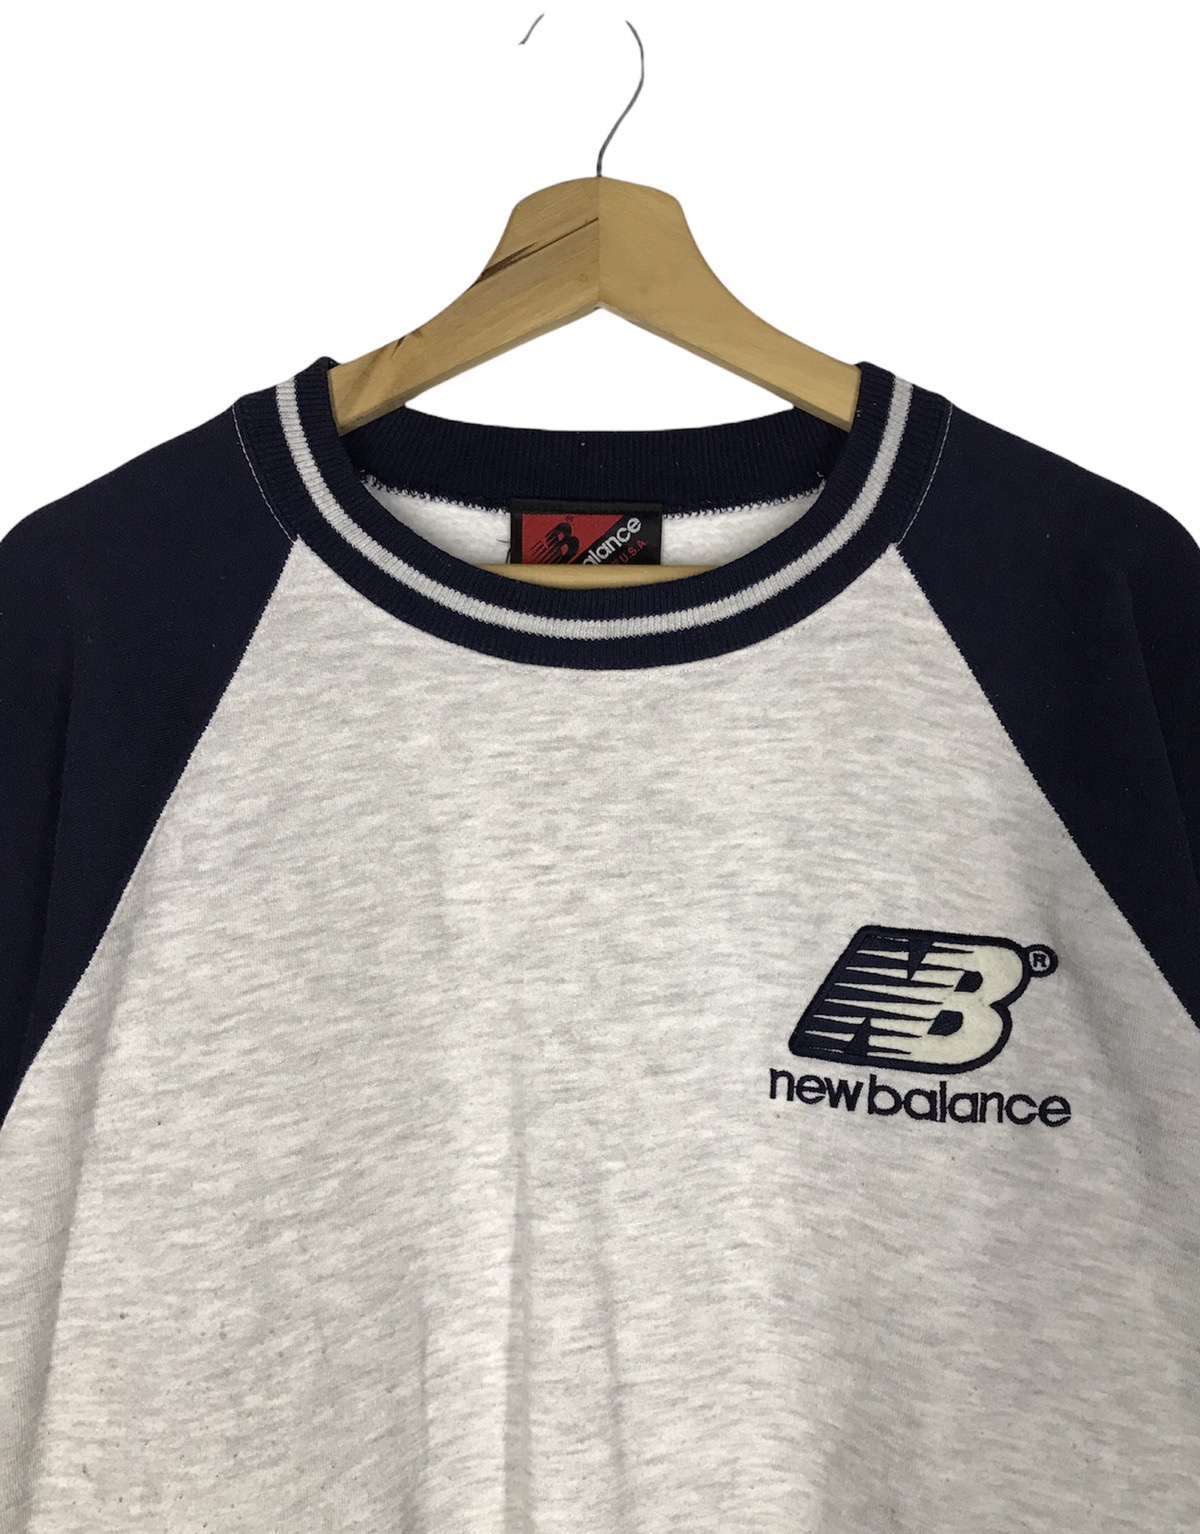 Vintage 90’s New Balance Sweatshirts - 3